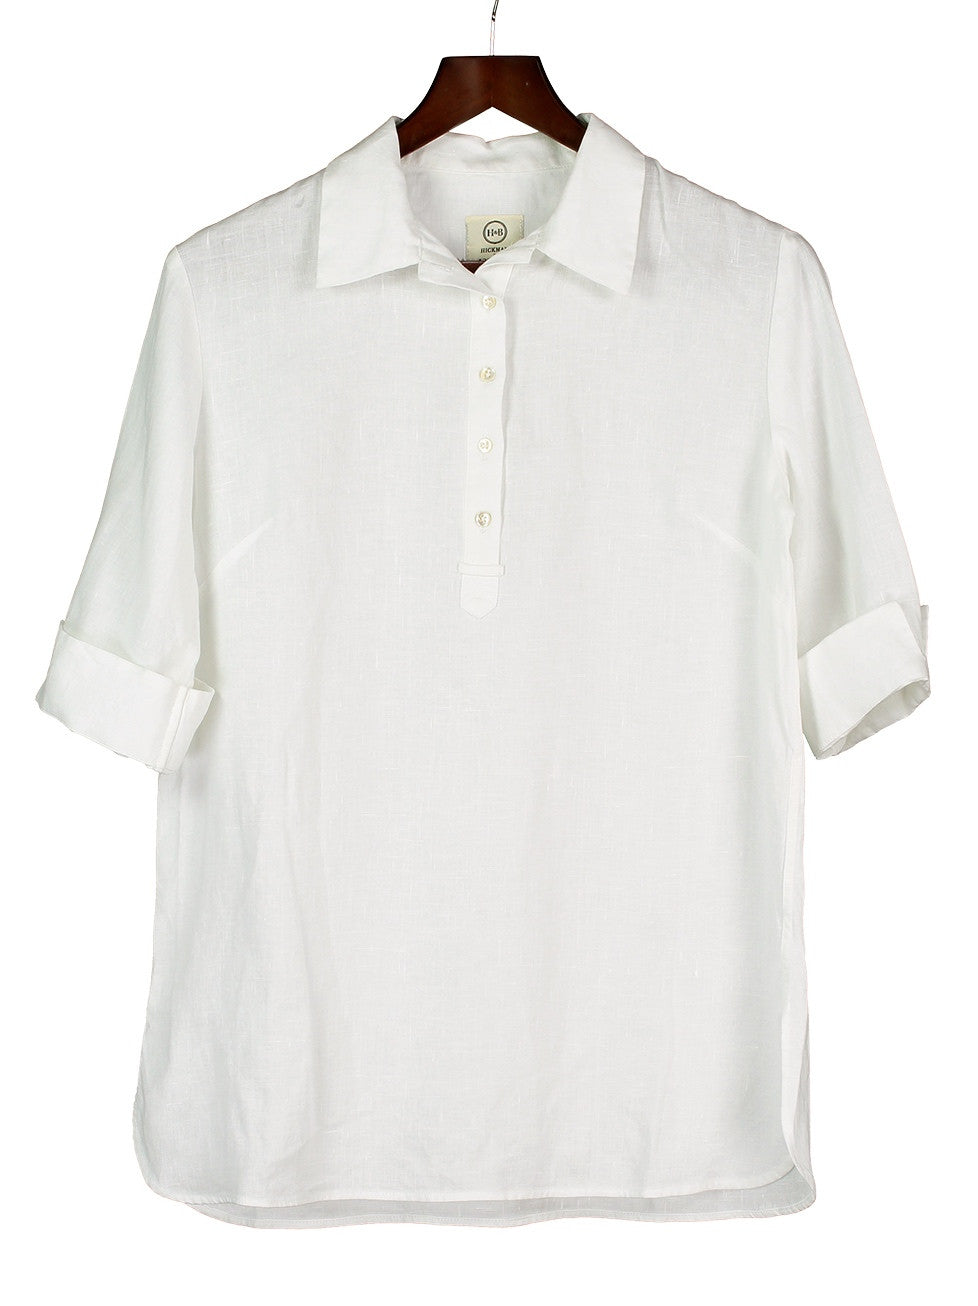 SAFARI SHIRT IN WHITE LINEN, Shirt, Hickman & Bousfield - Hickman & Bousfield, Safari and Travel Clothing